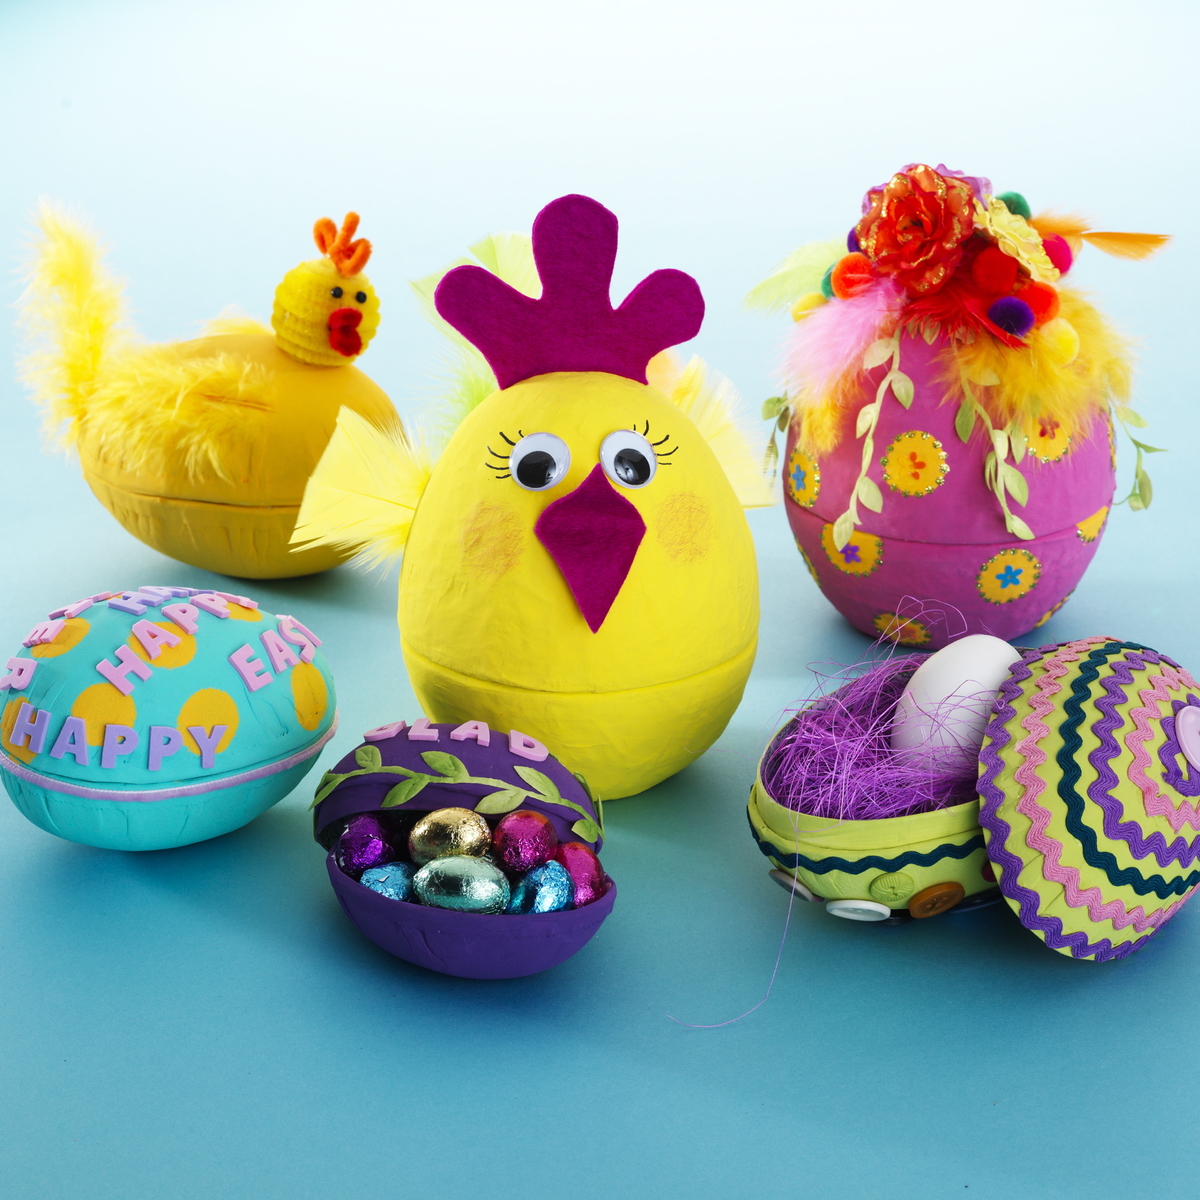 Decorative eggs!